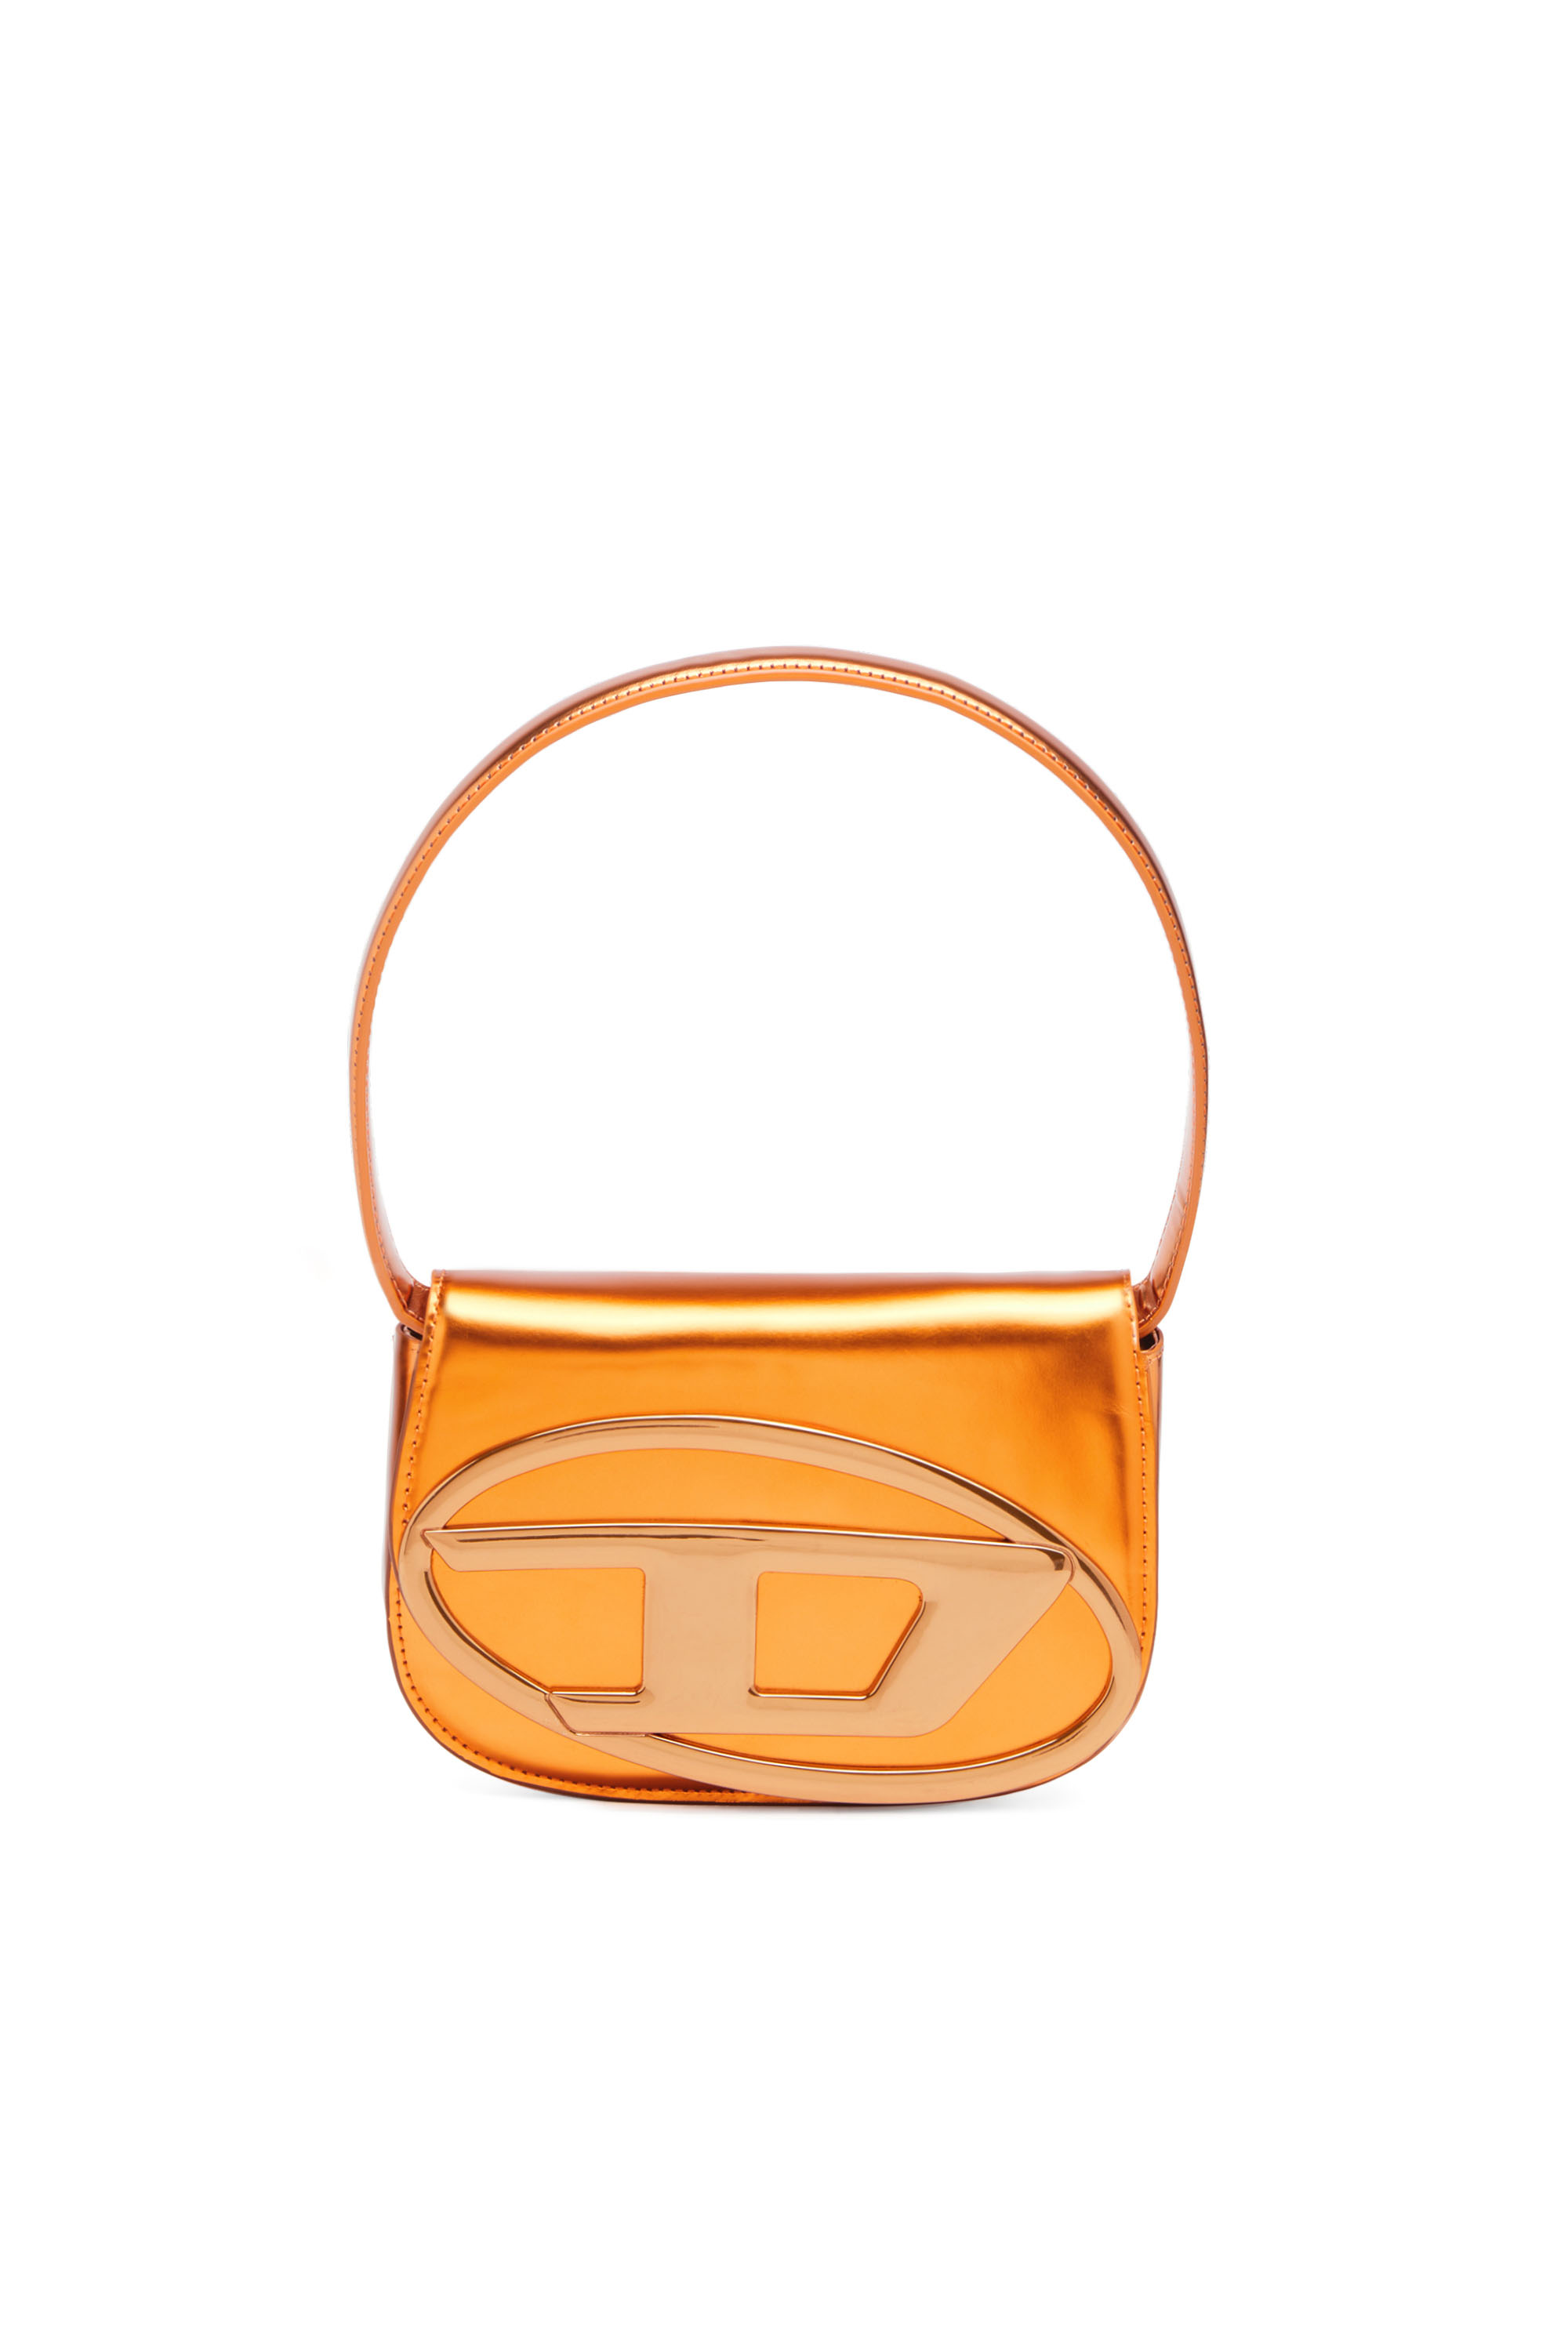 Diesel - 1DR - Iconic shoulder bag in mirrored leather - Shoulder Bags - Woman - Orange